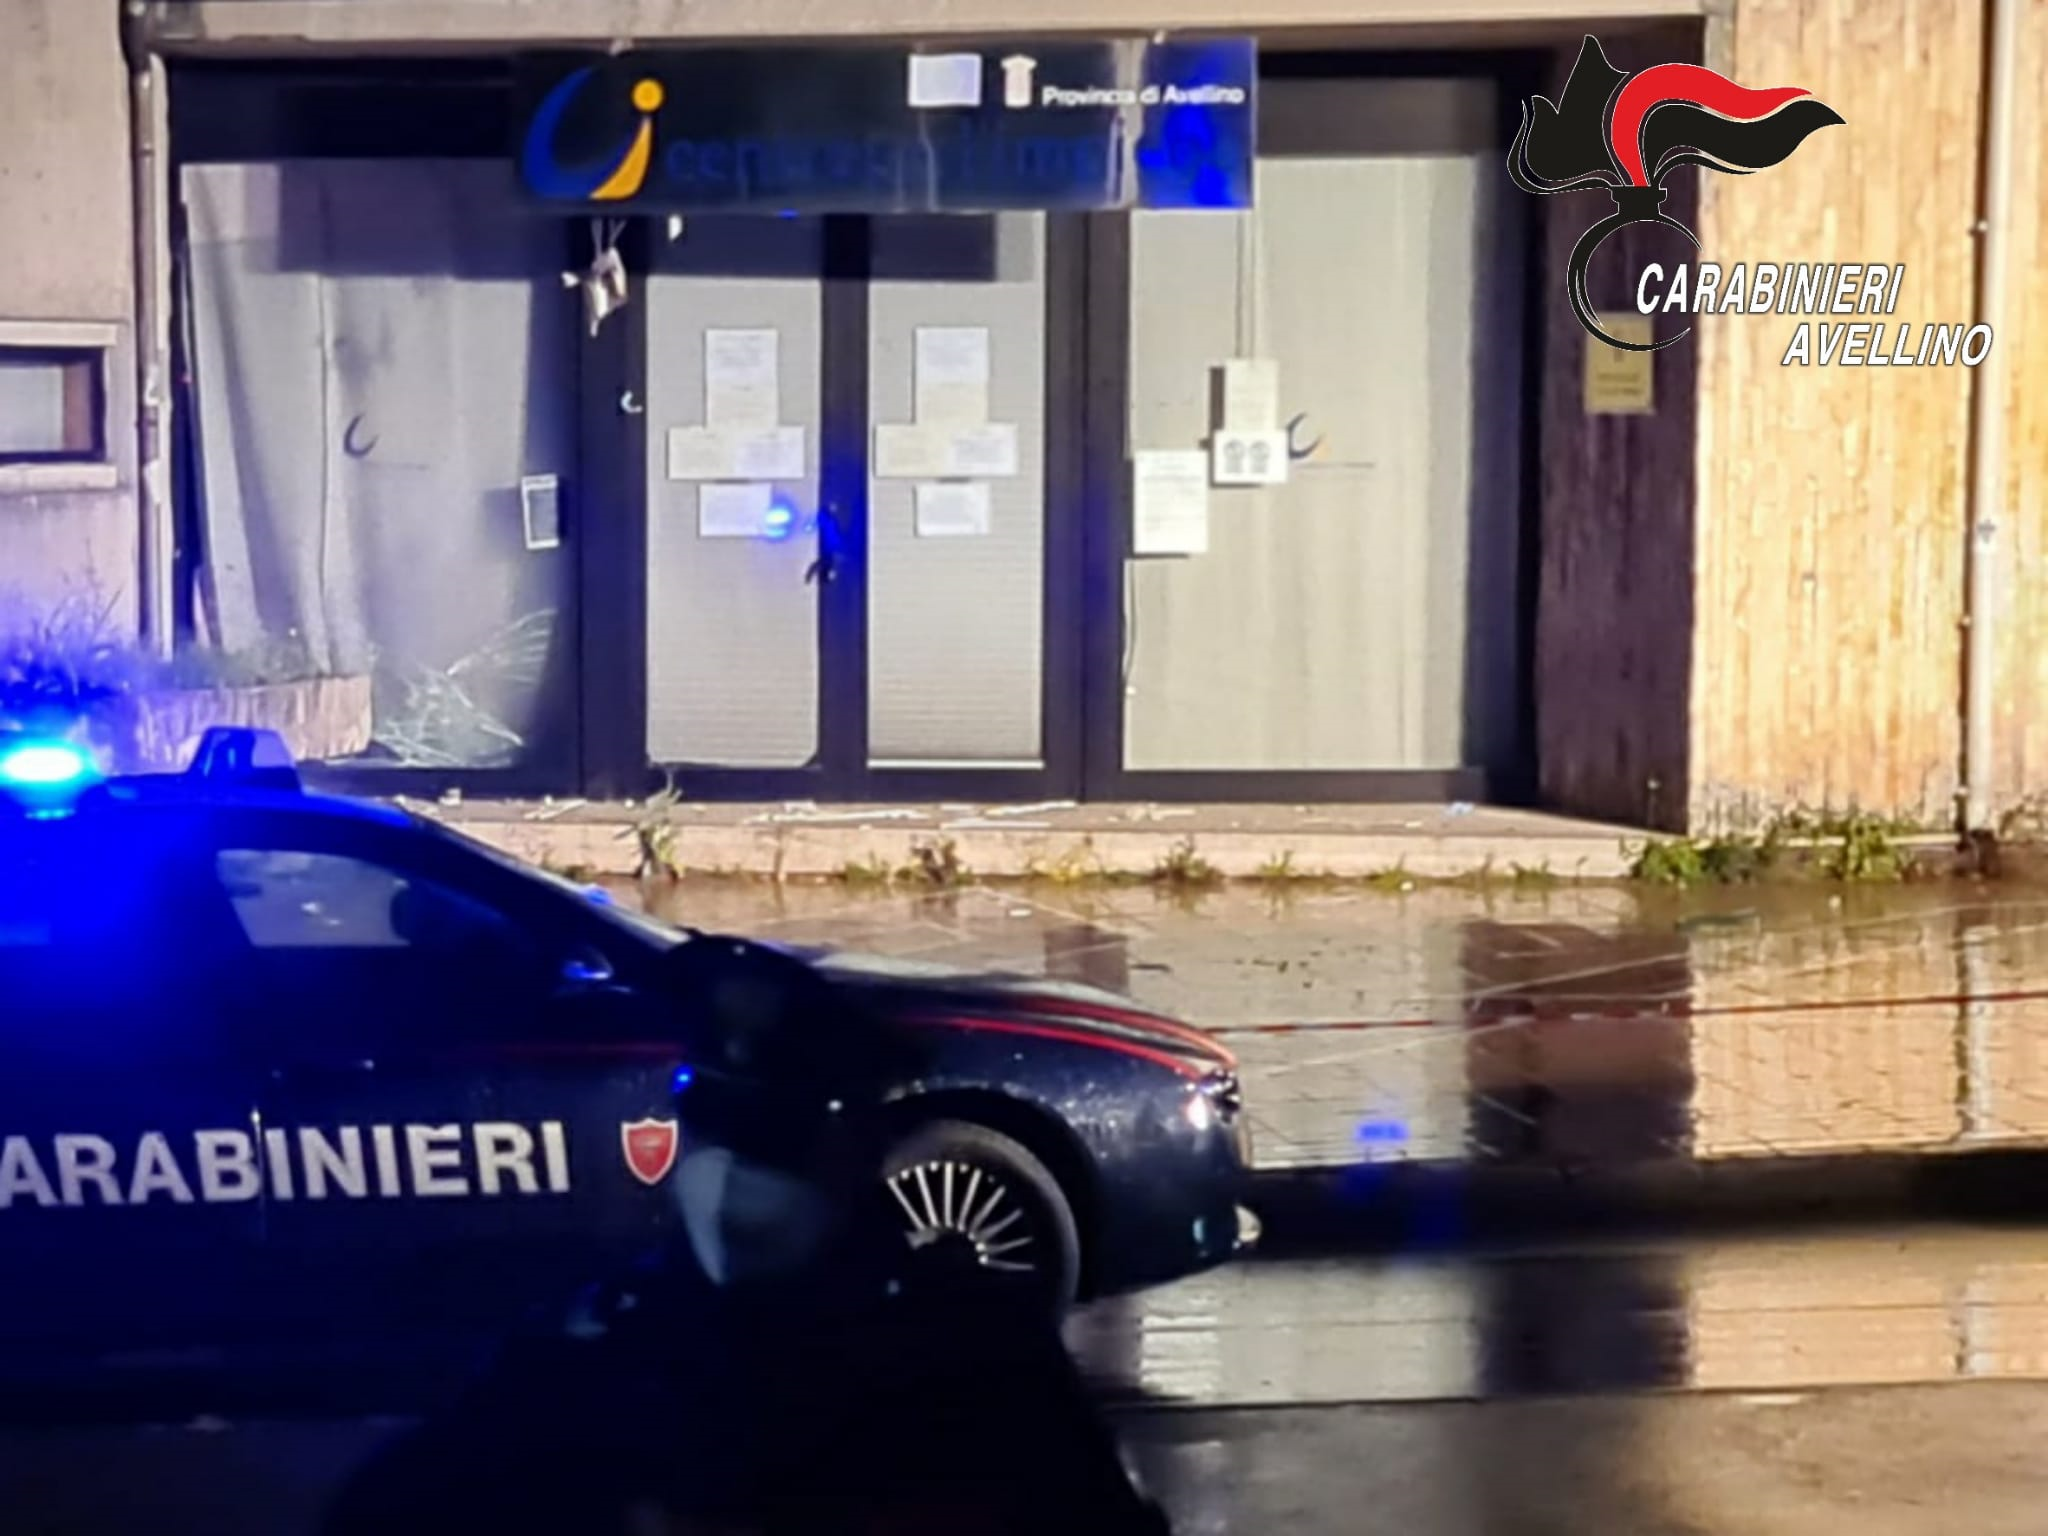 Avellino| Bomba carta al Centro per l’Impiego, 2 misure cautelari